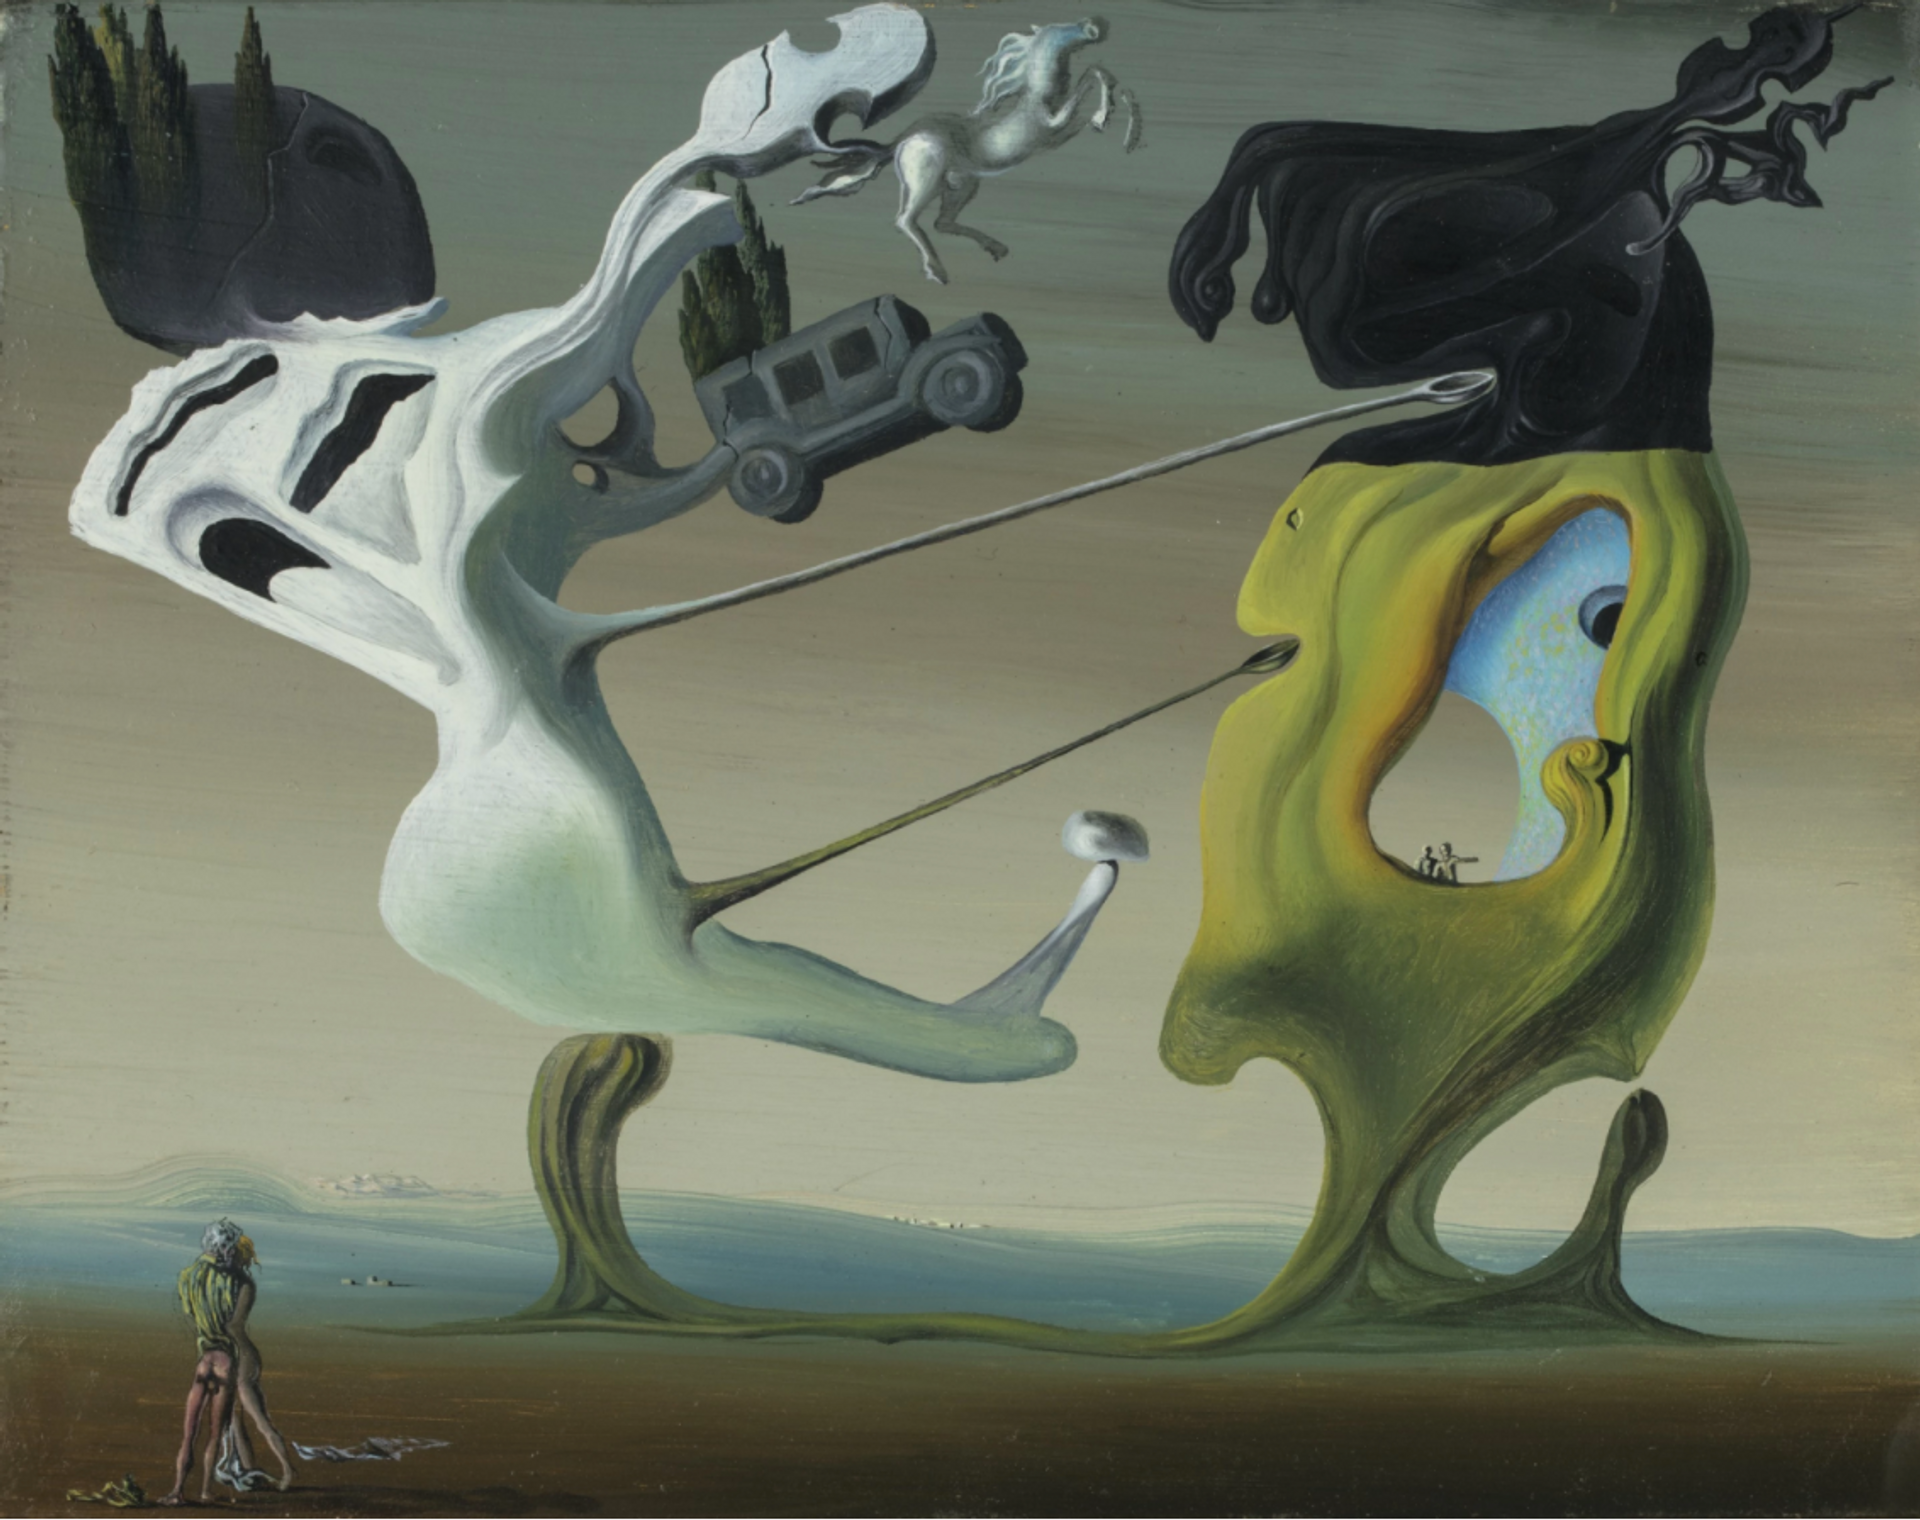 Maison pour Erotomane by Salvador Dalí